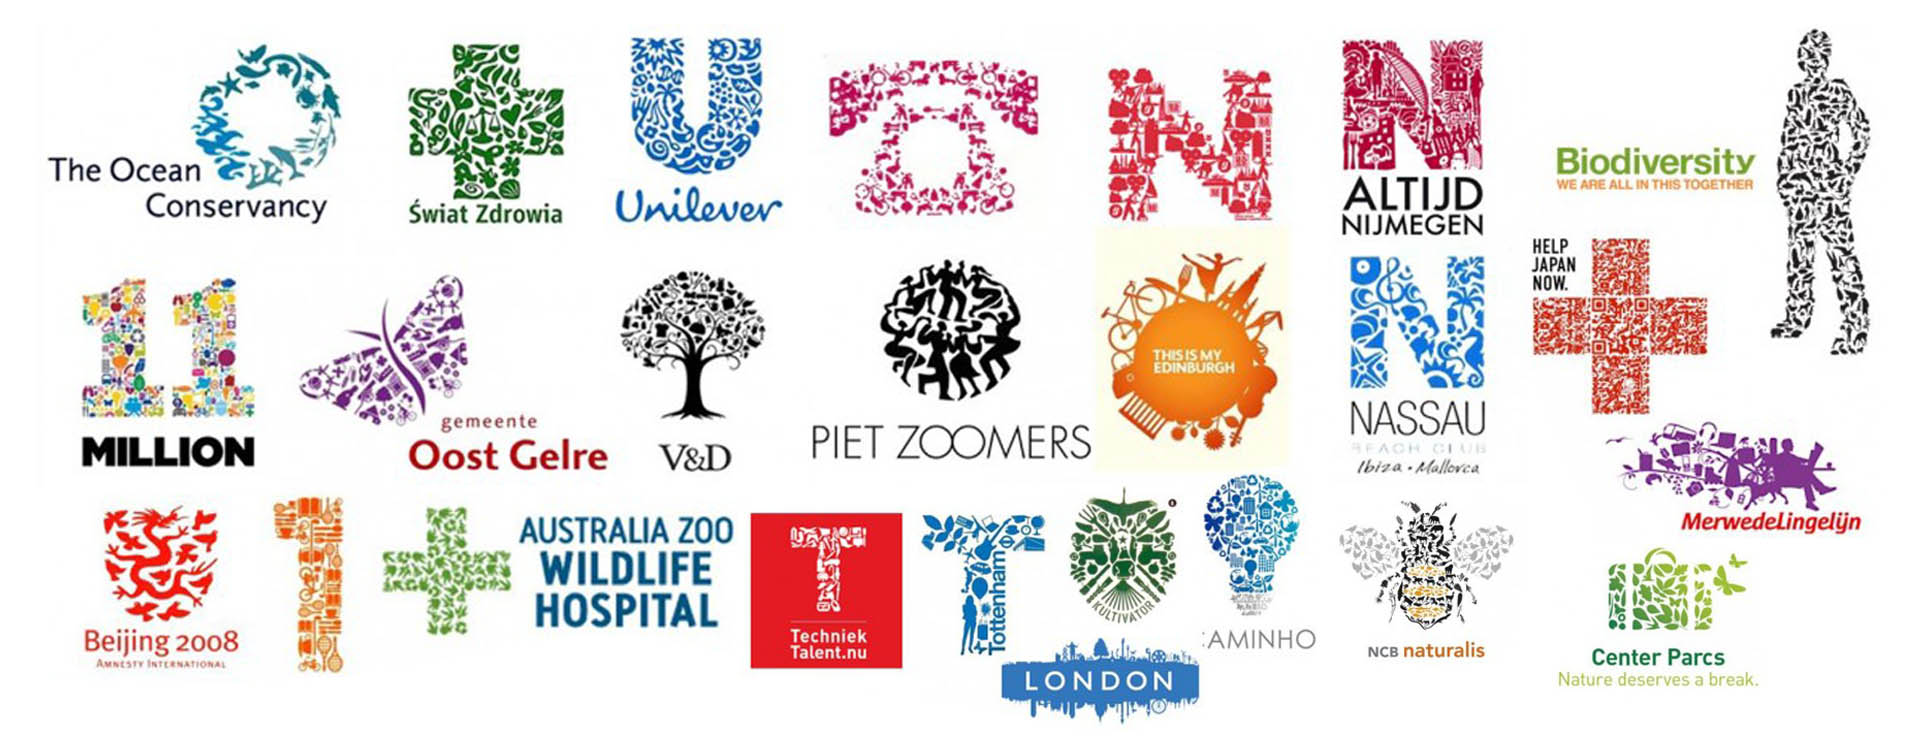 The logo  Unilever